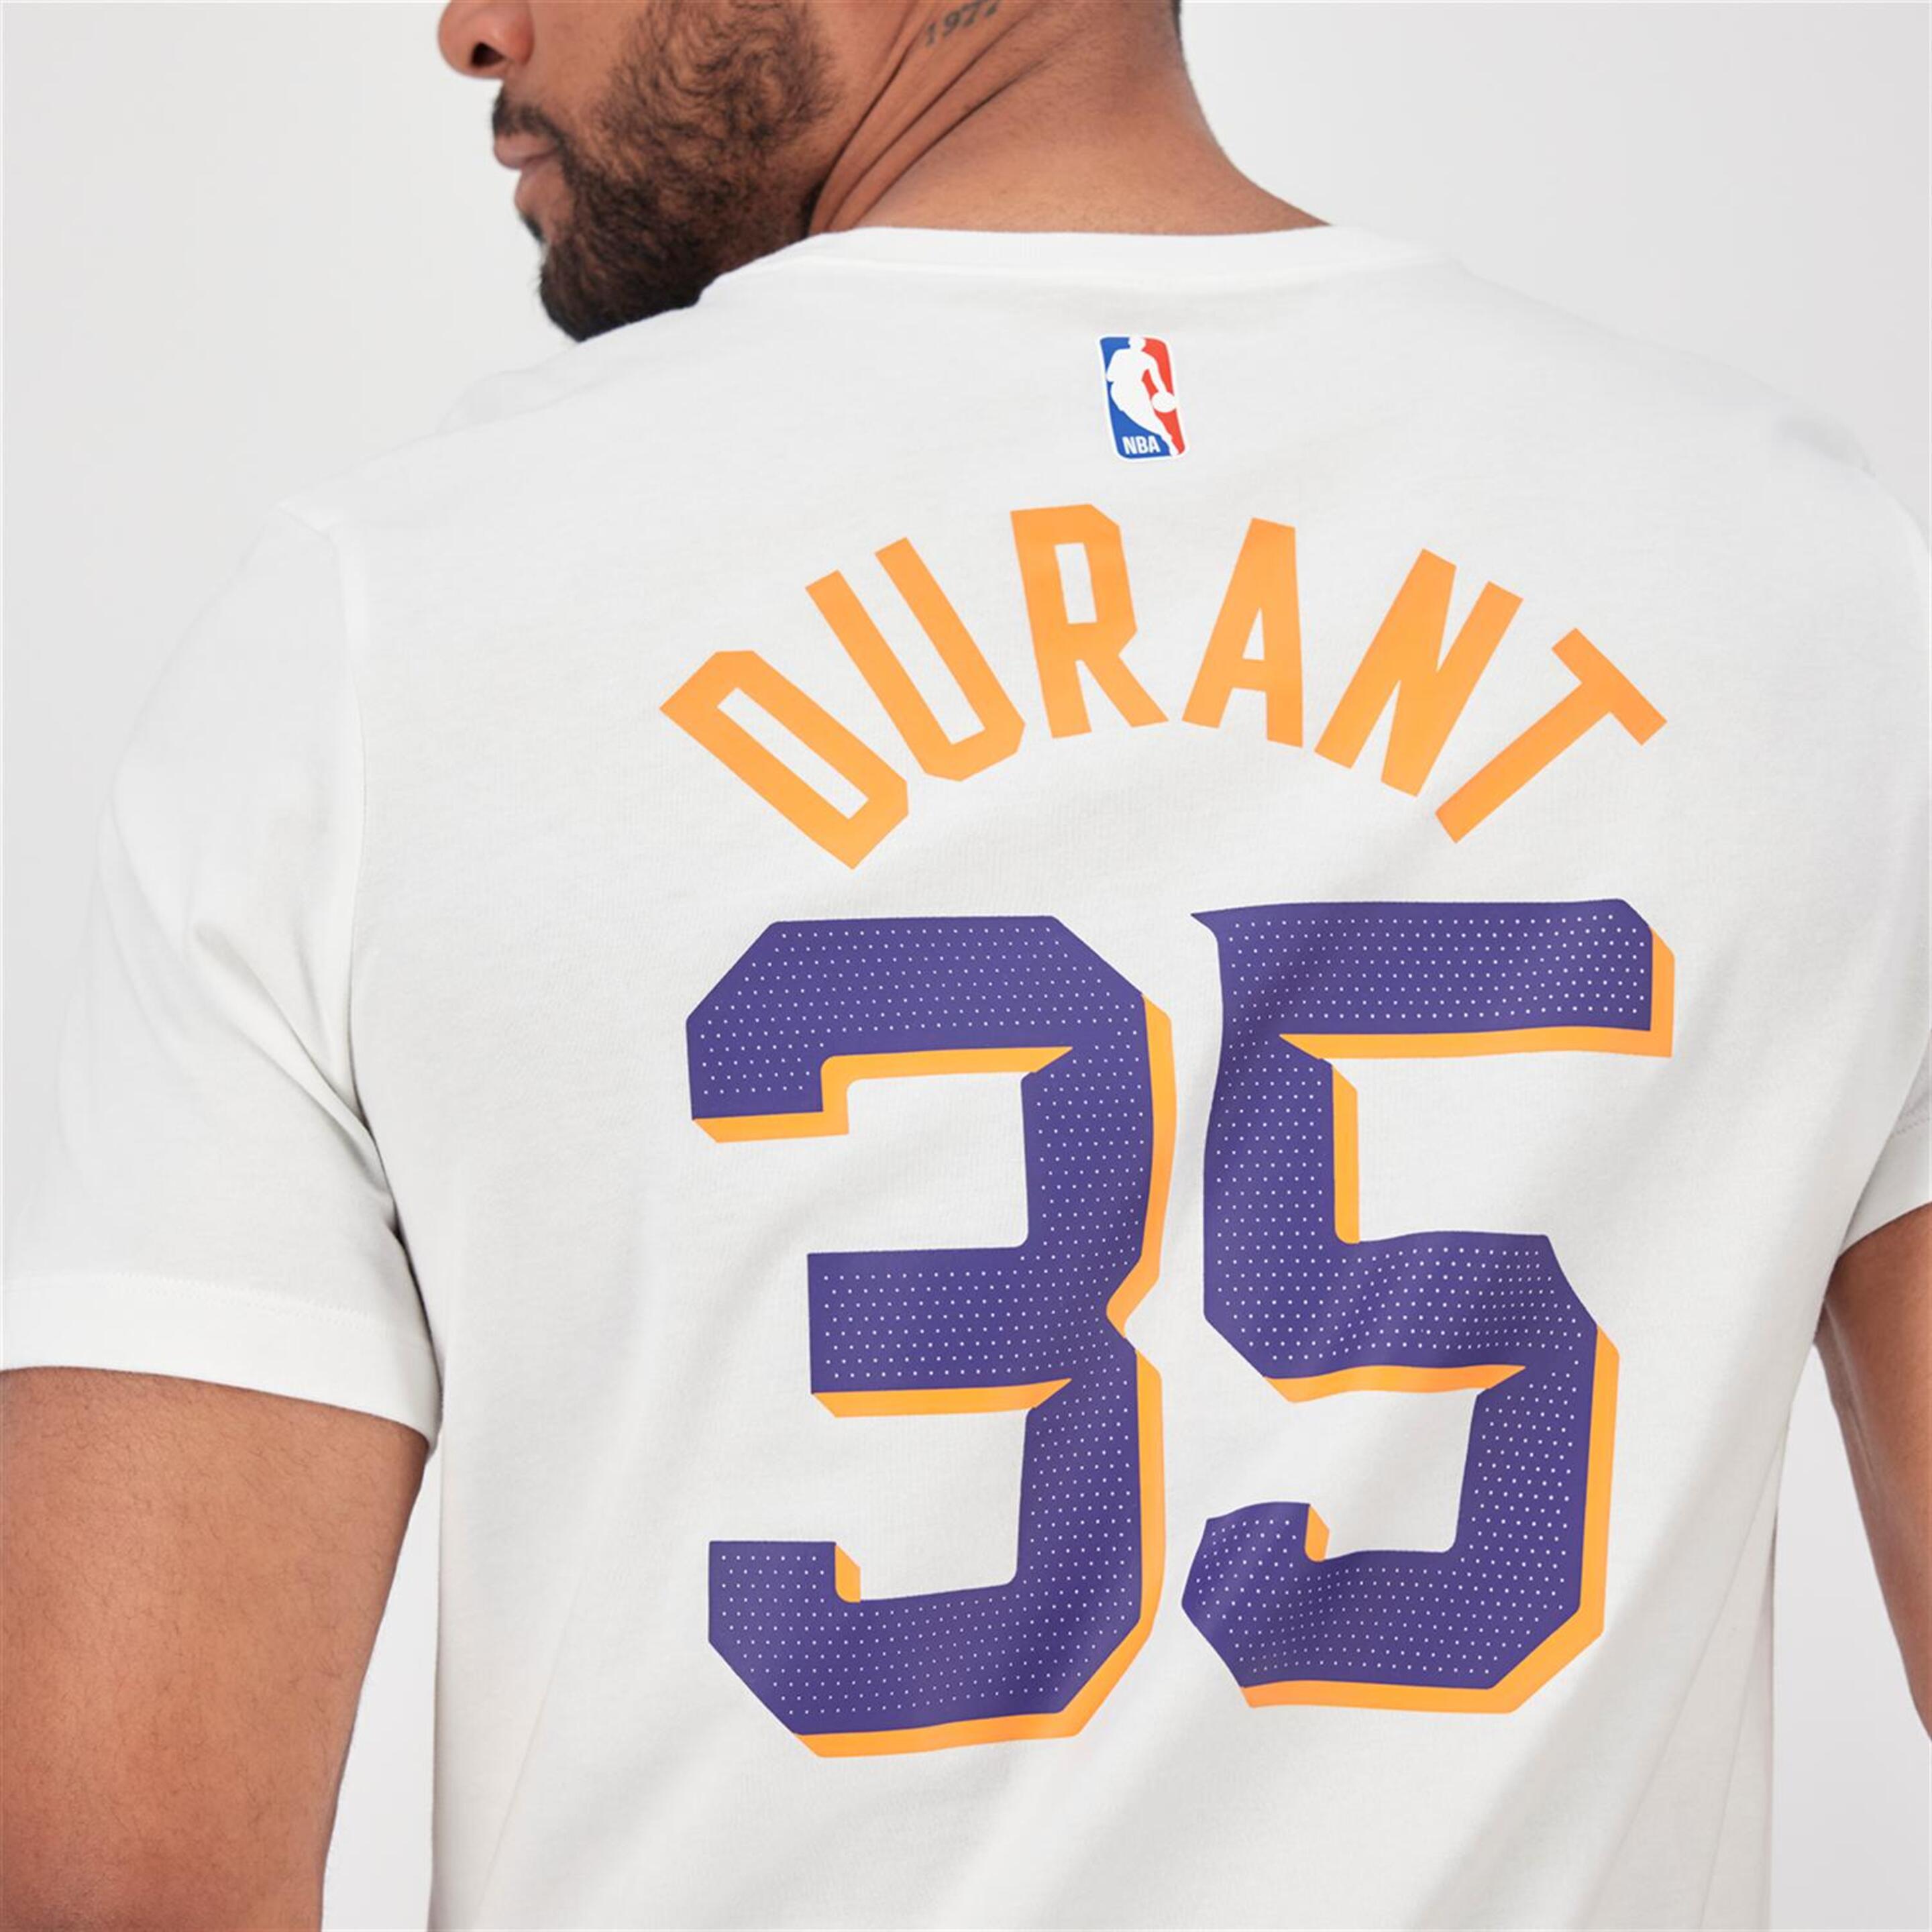 Nike K Durant Phoenix - Blanco - Camiseta Baloncesto Hombre